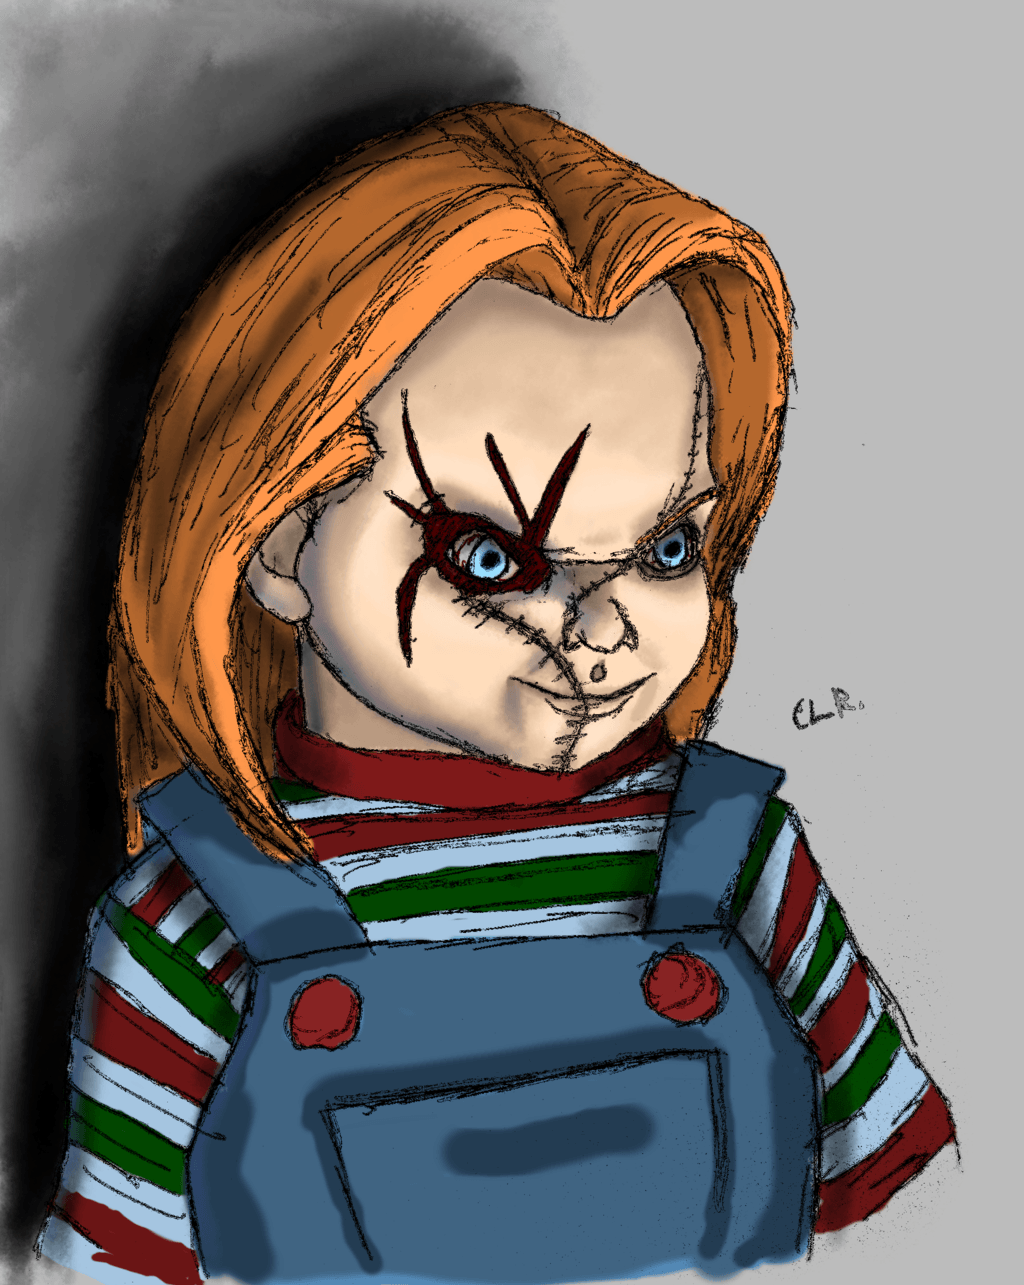 Chucky Cursed Art (Charles Lee Ray)